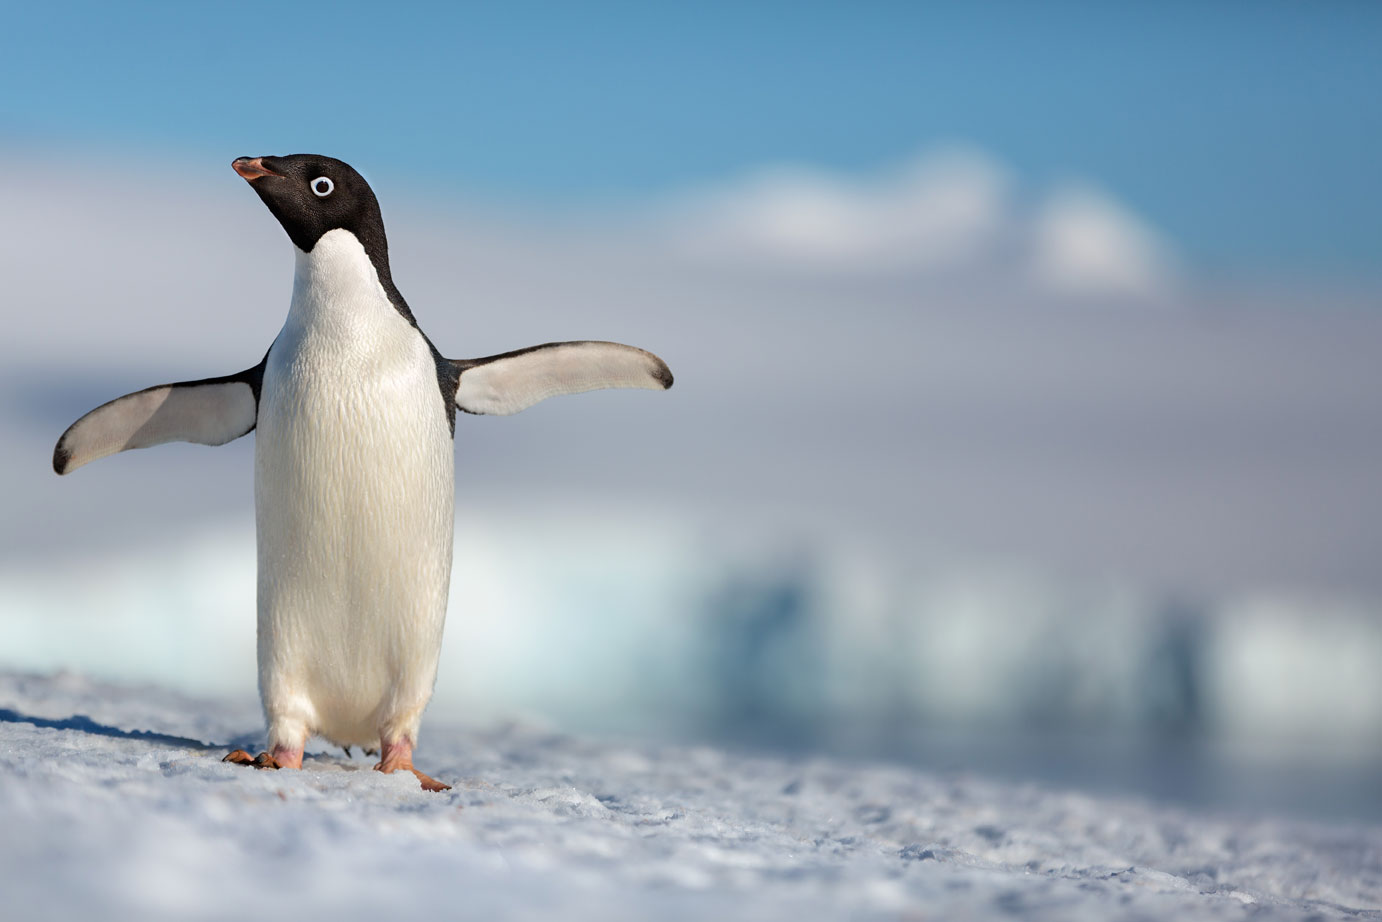 REVIEW: ‘Penguins’ is a kid-friendly, hilarious nature film - WordSlingers